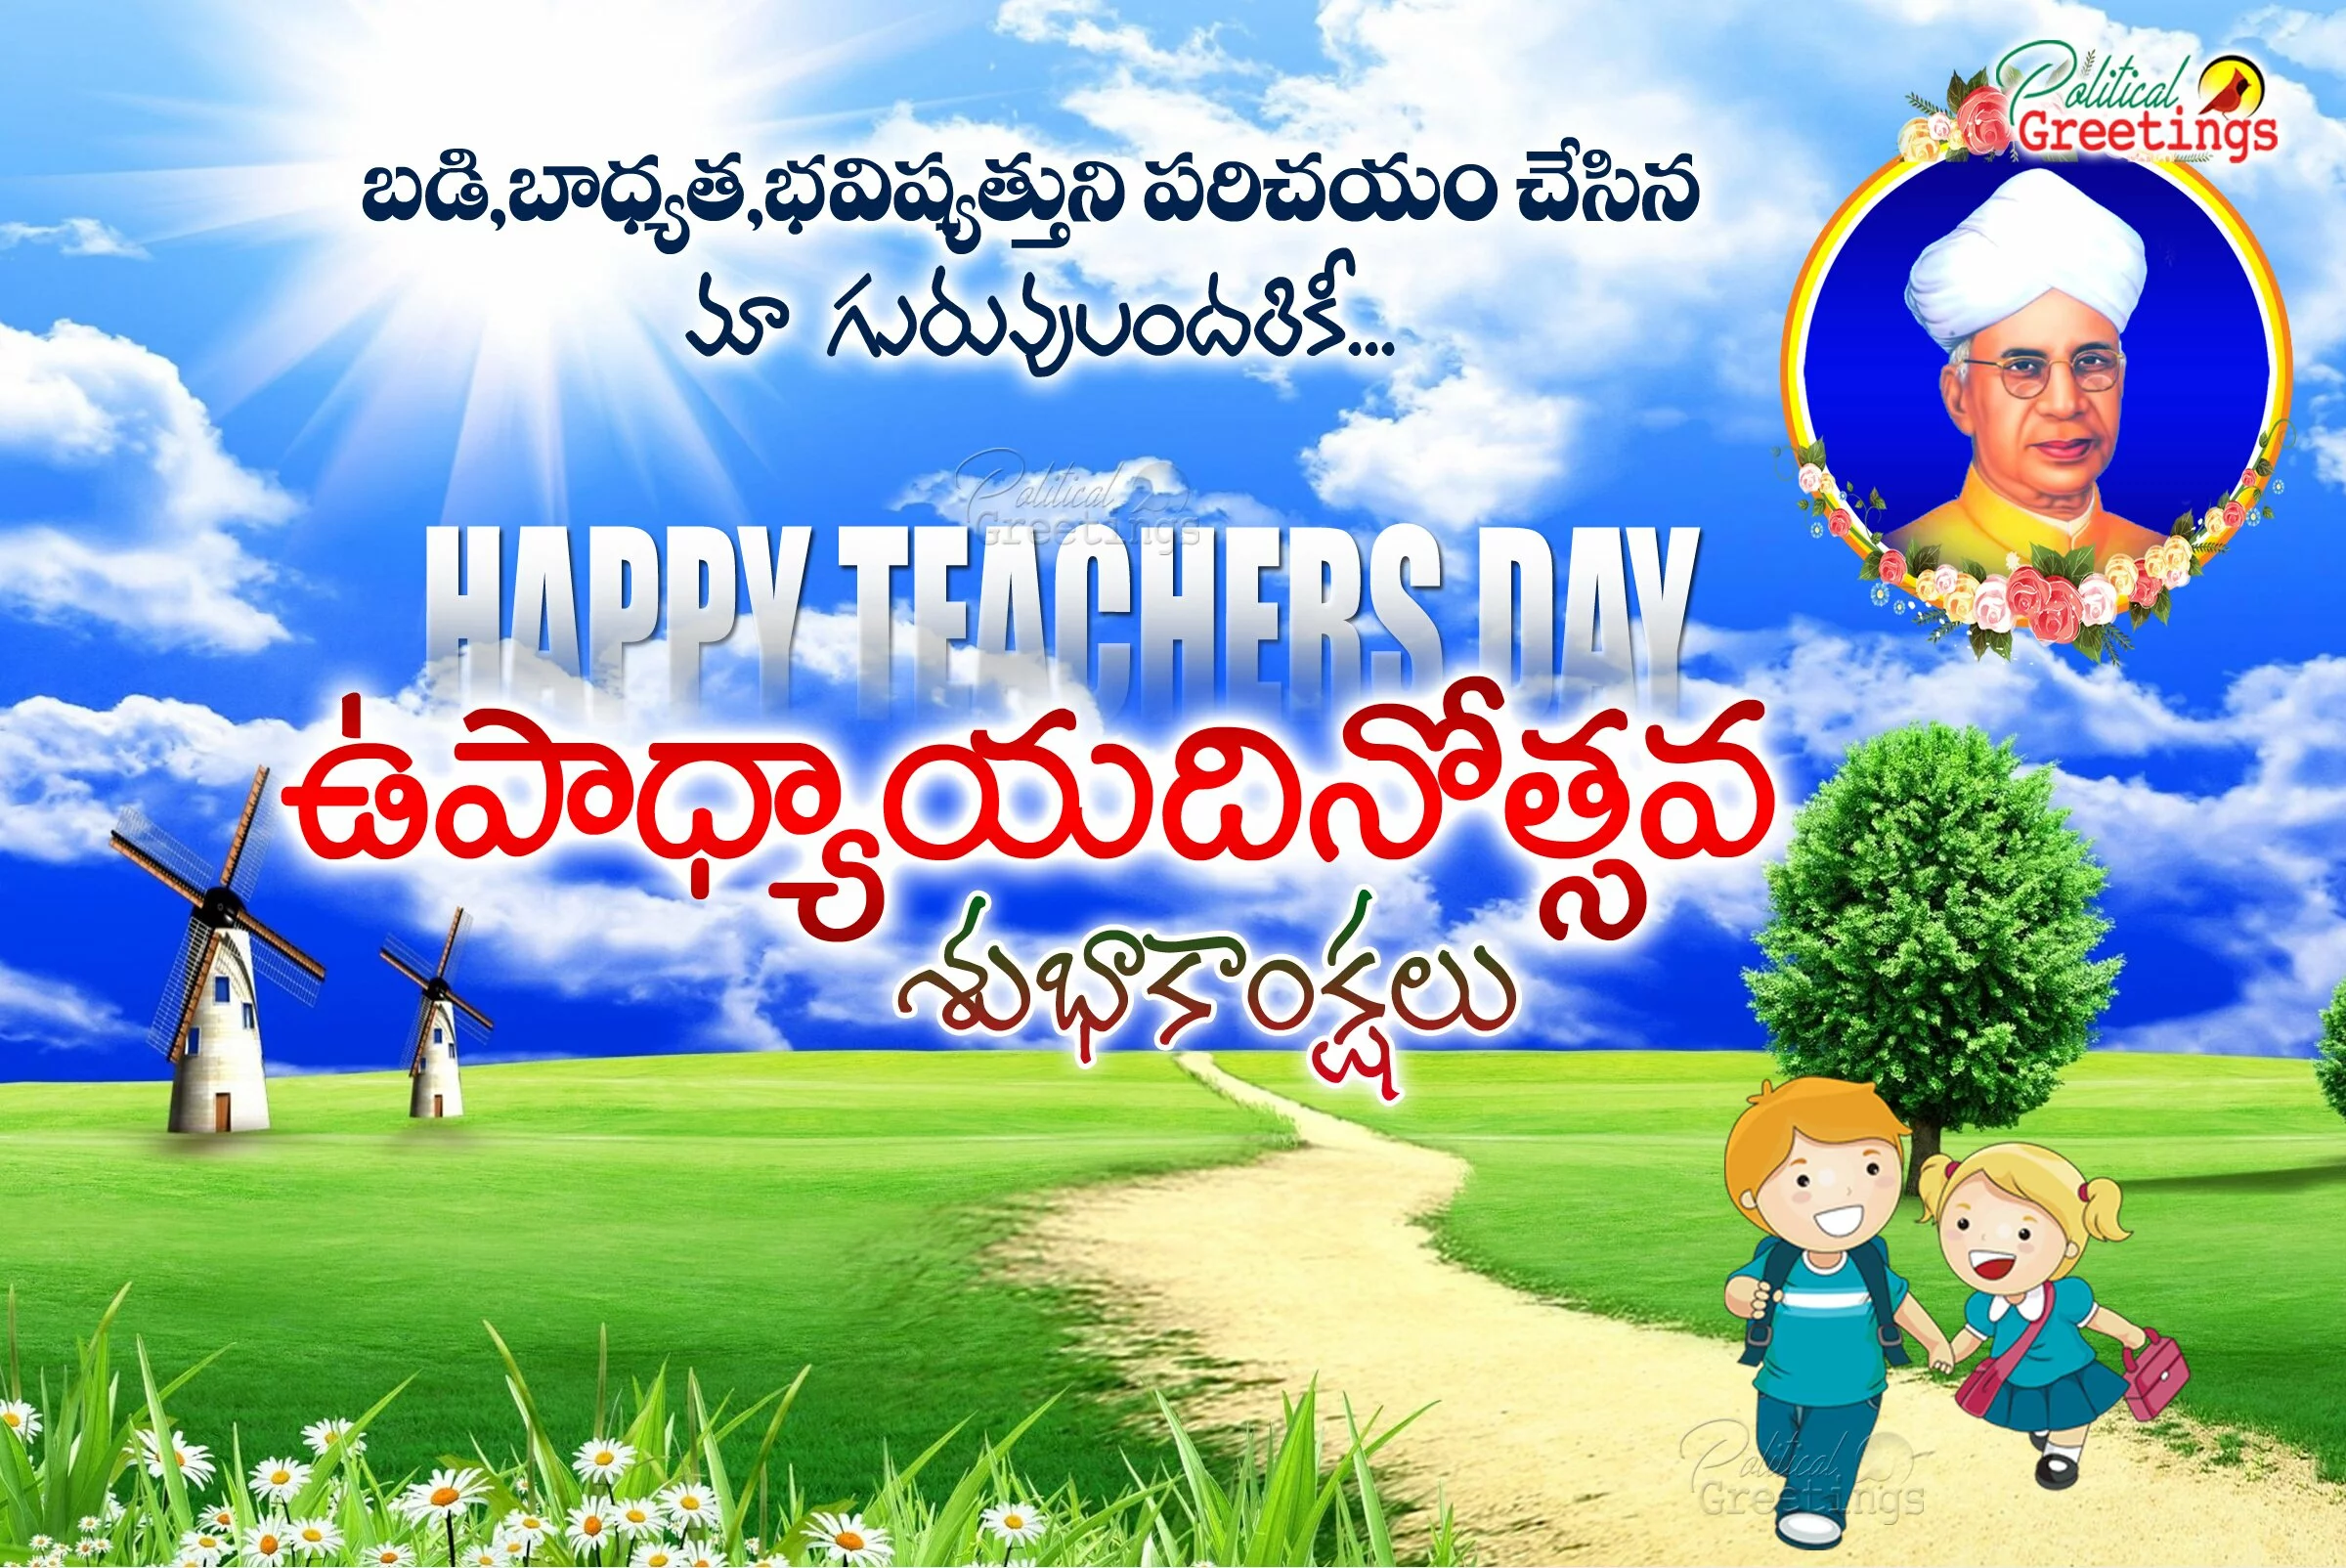 Telugu Teachers Day Greetings Quotes in Telugu-Telugu Teachers Day Inspirational Quotes in Telugu